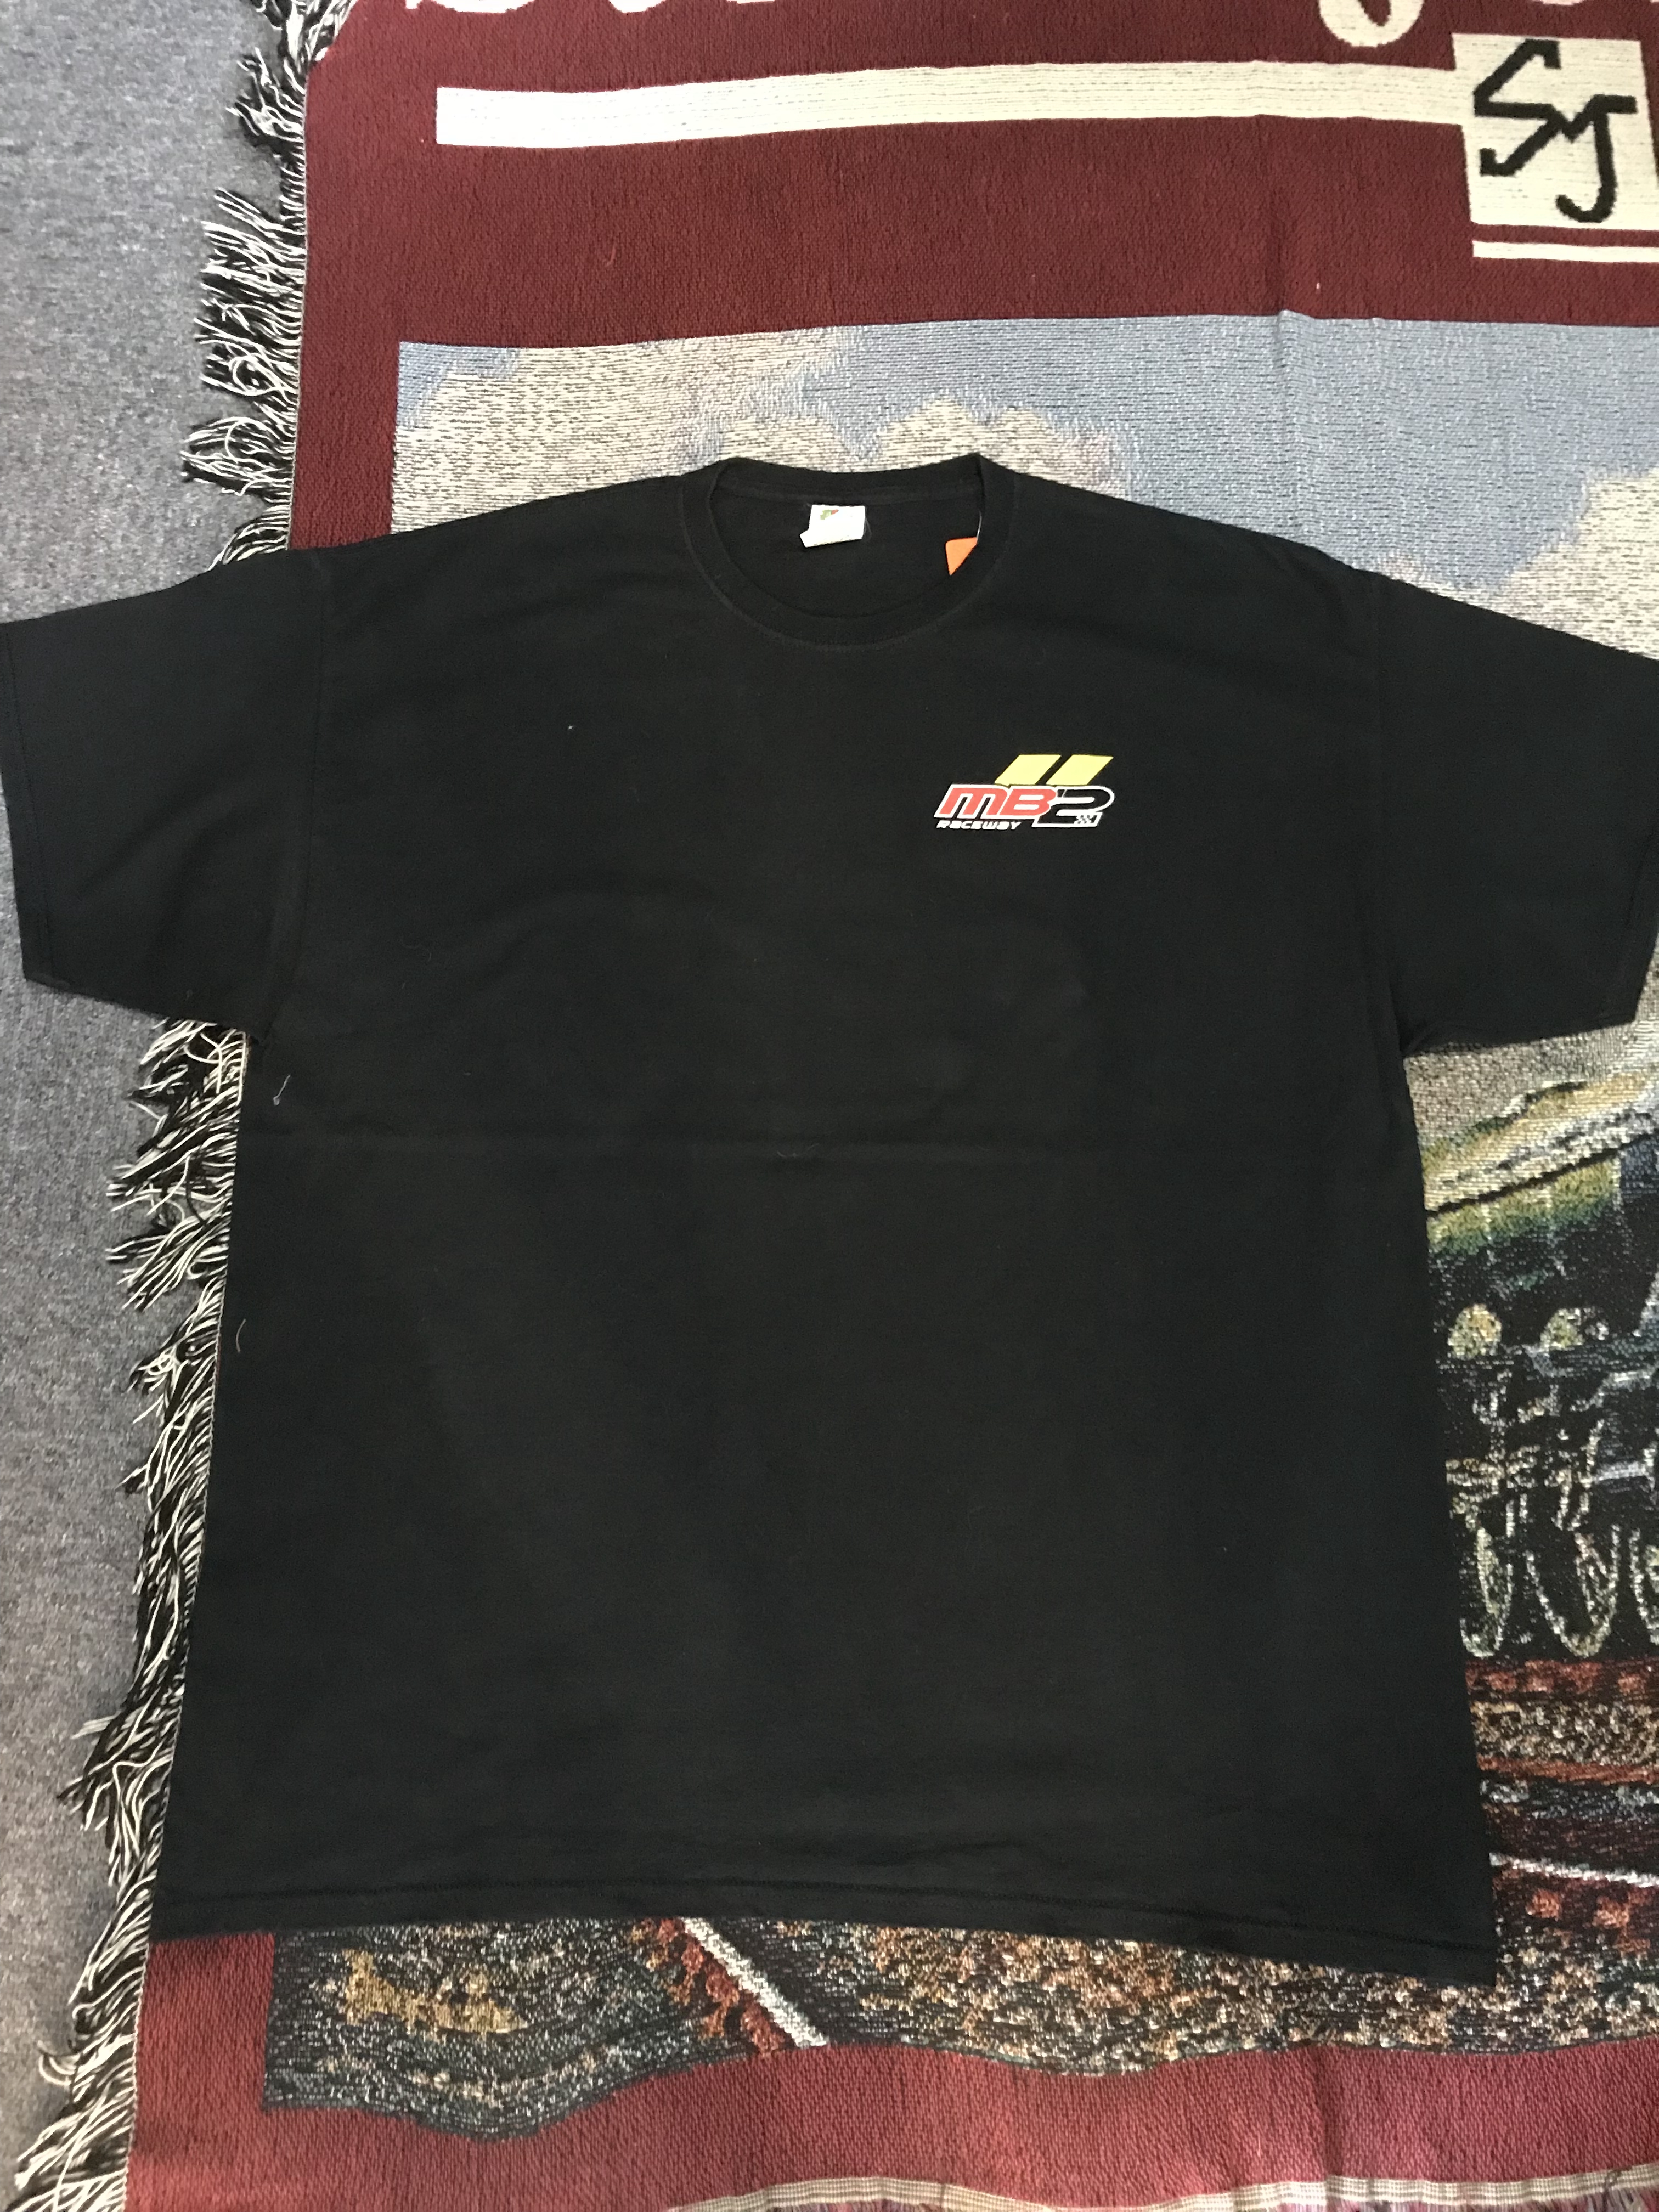 MB2 Raceway Tシャツ